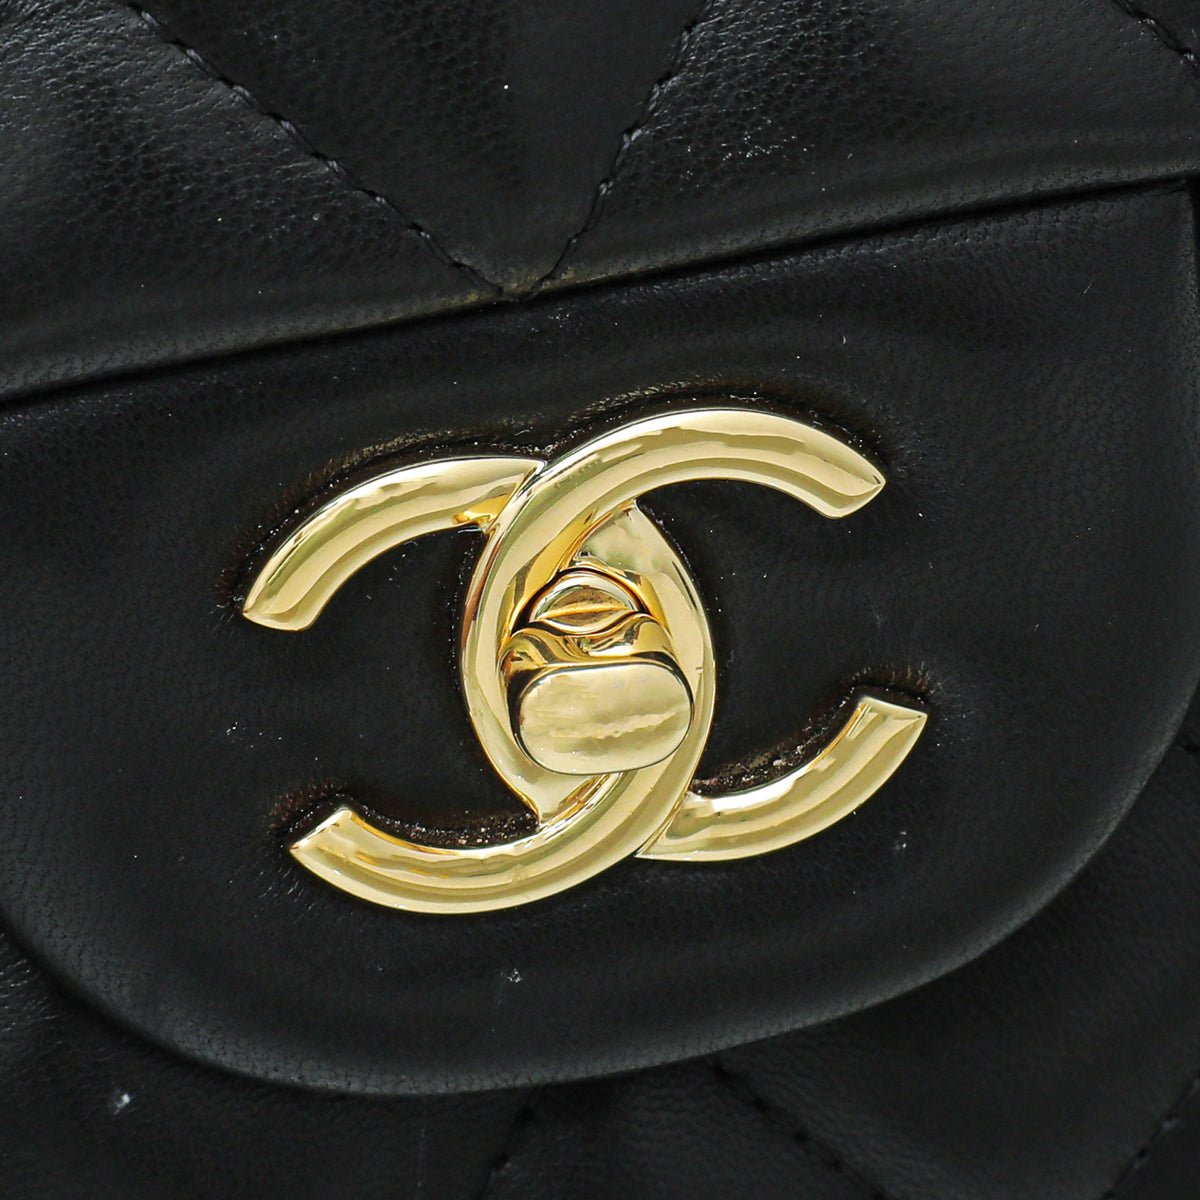 Chanel - Chanel Black CC Classic Double Flap Jumbo Bag | The Closet